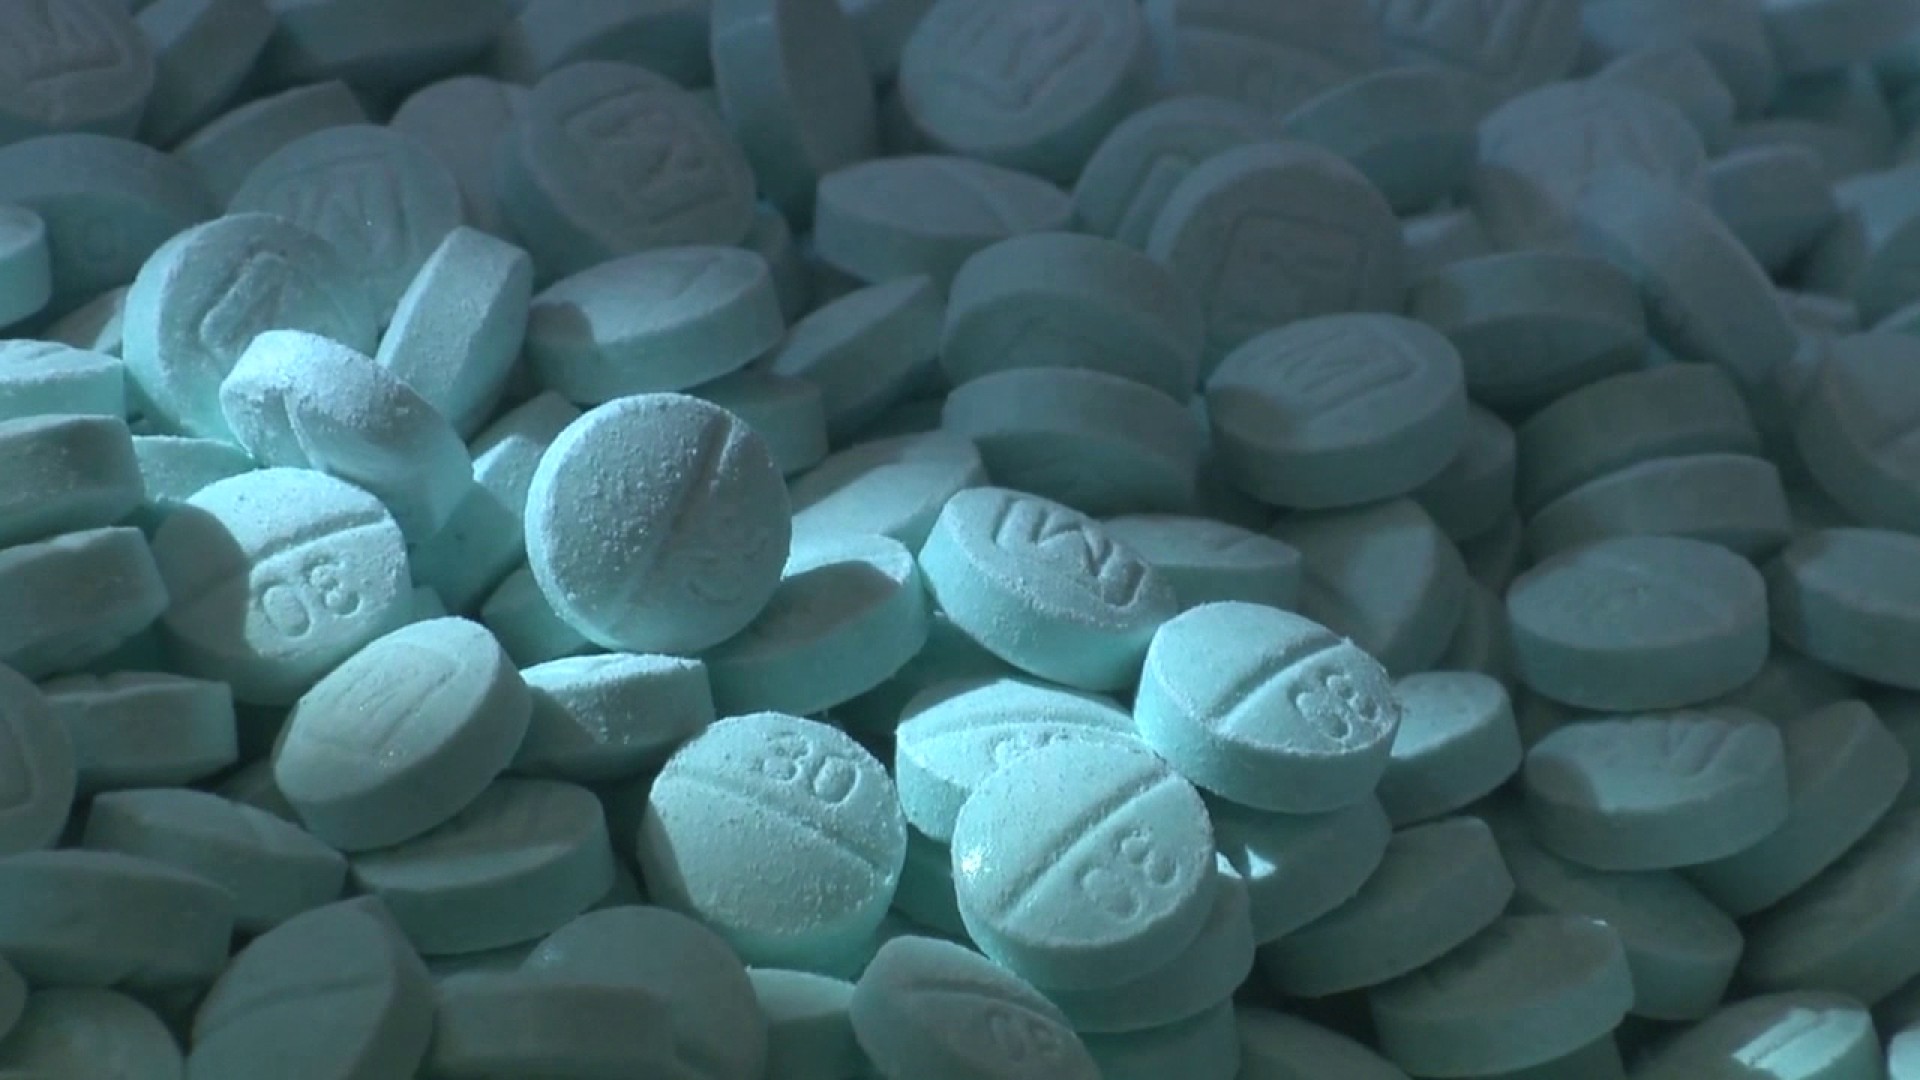 SA Police's 'fake drugs' warning as 10,000 'Xanax' tablets are